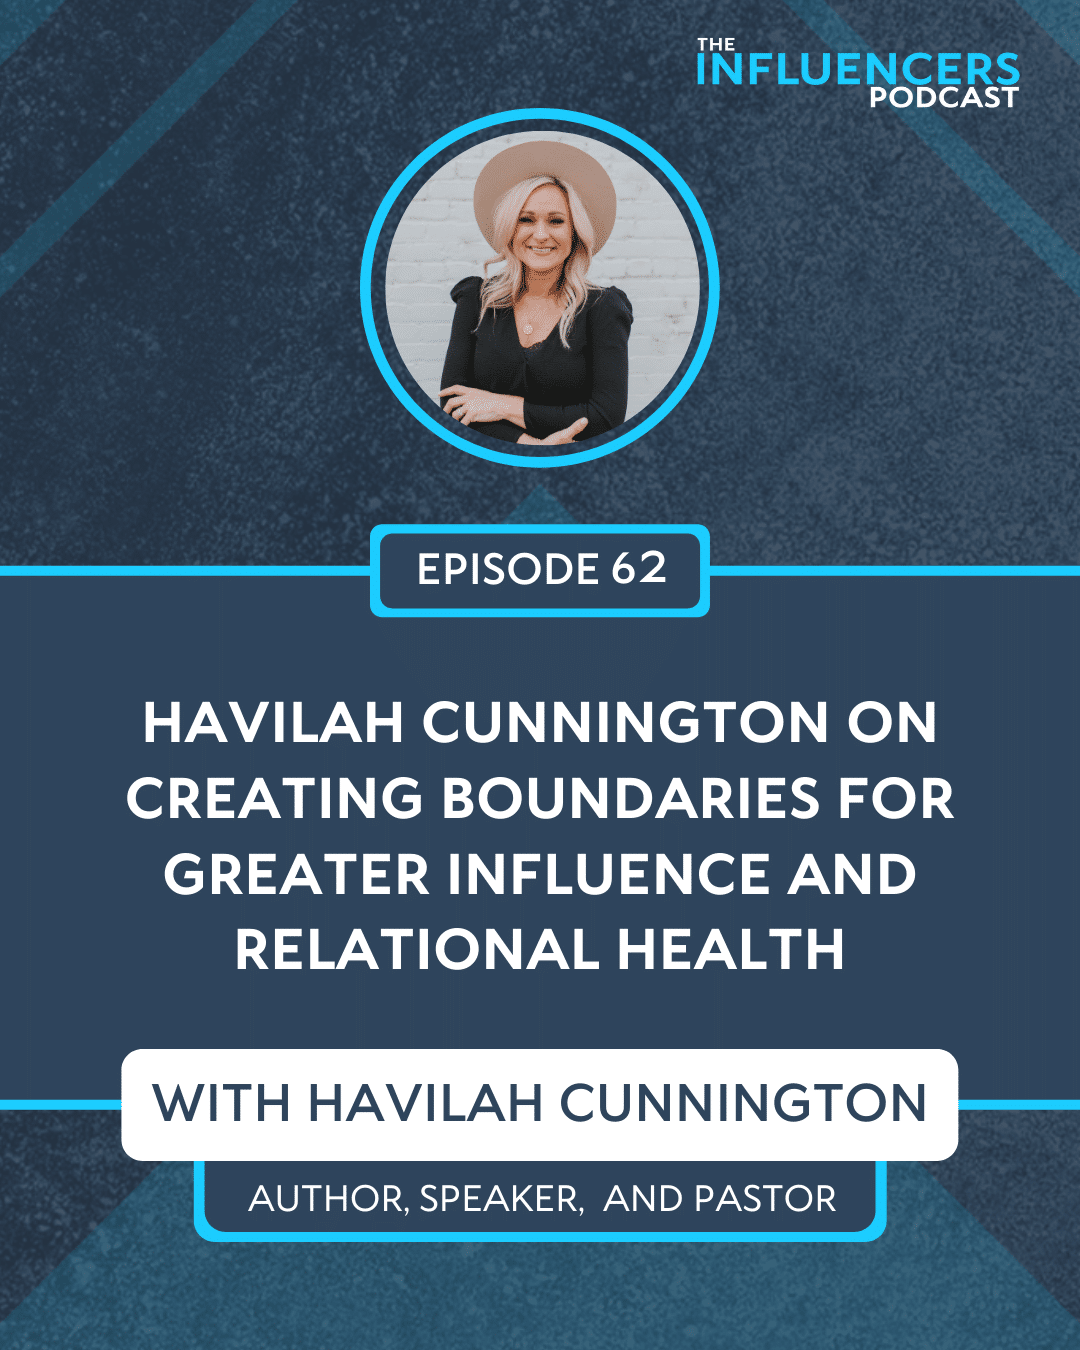 Episode 61 with Havilah Cunnington.